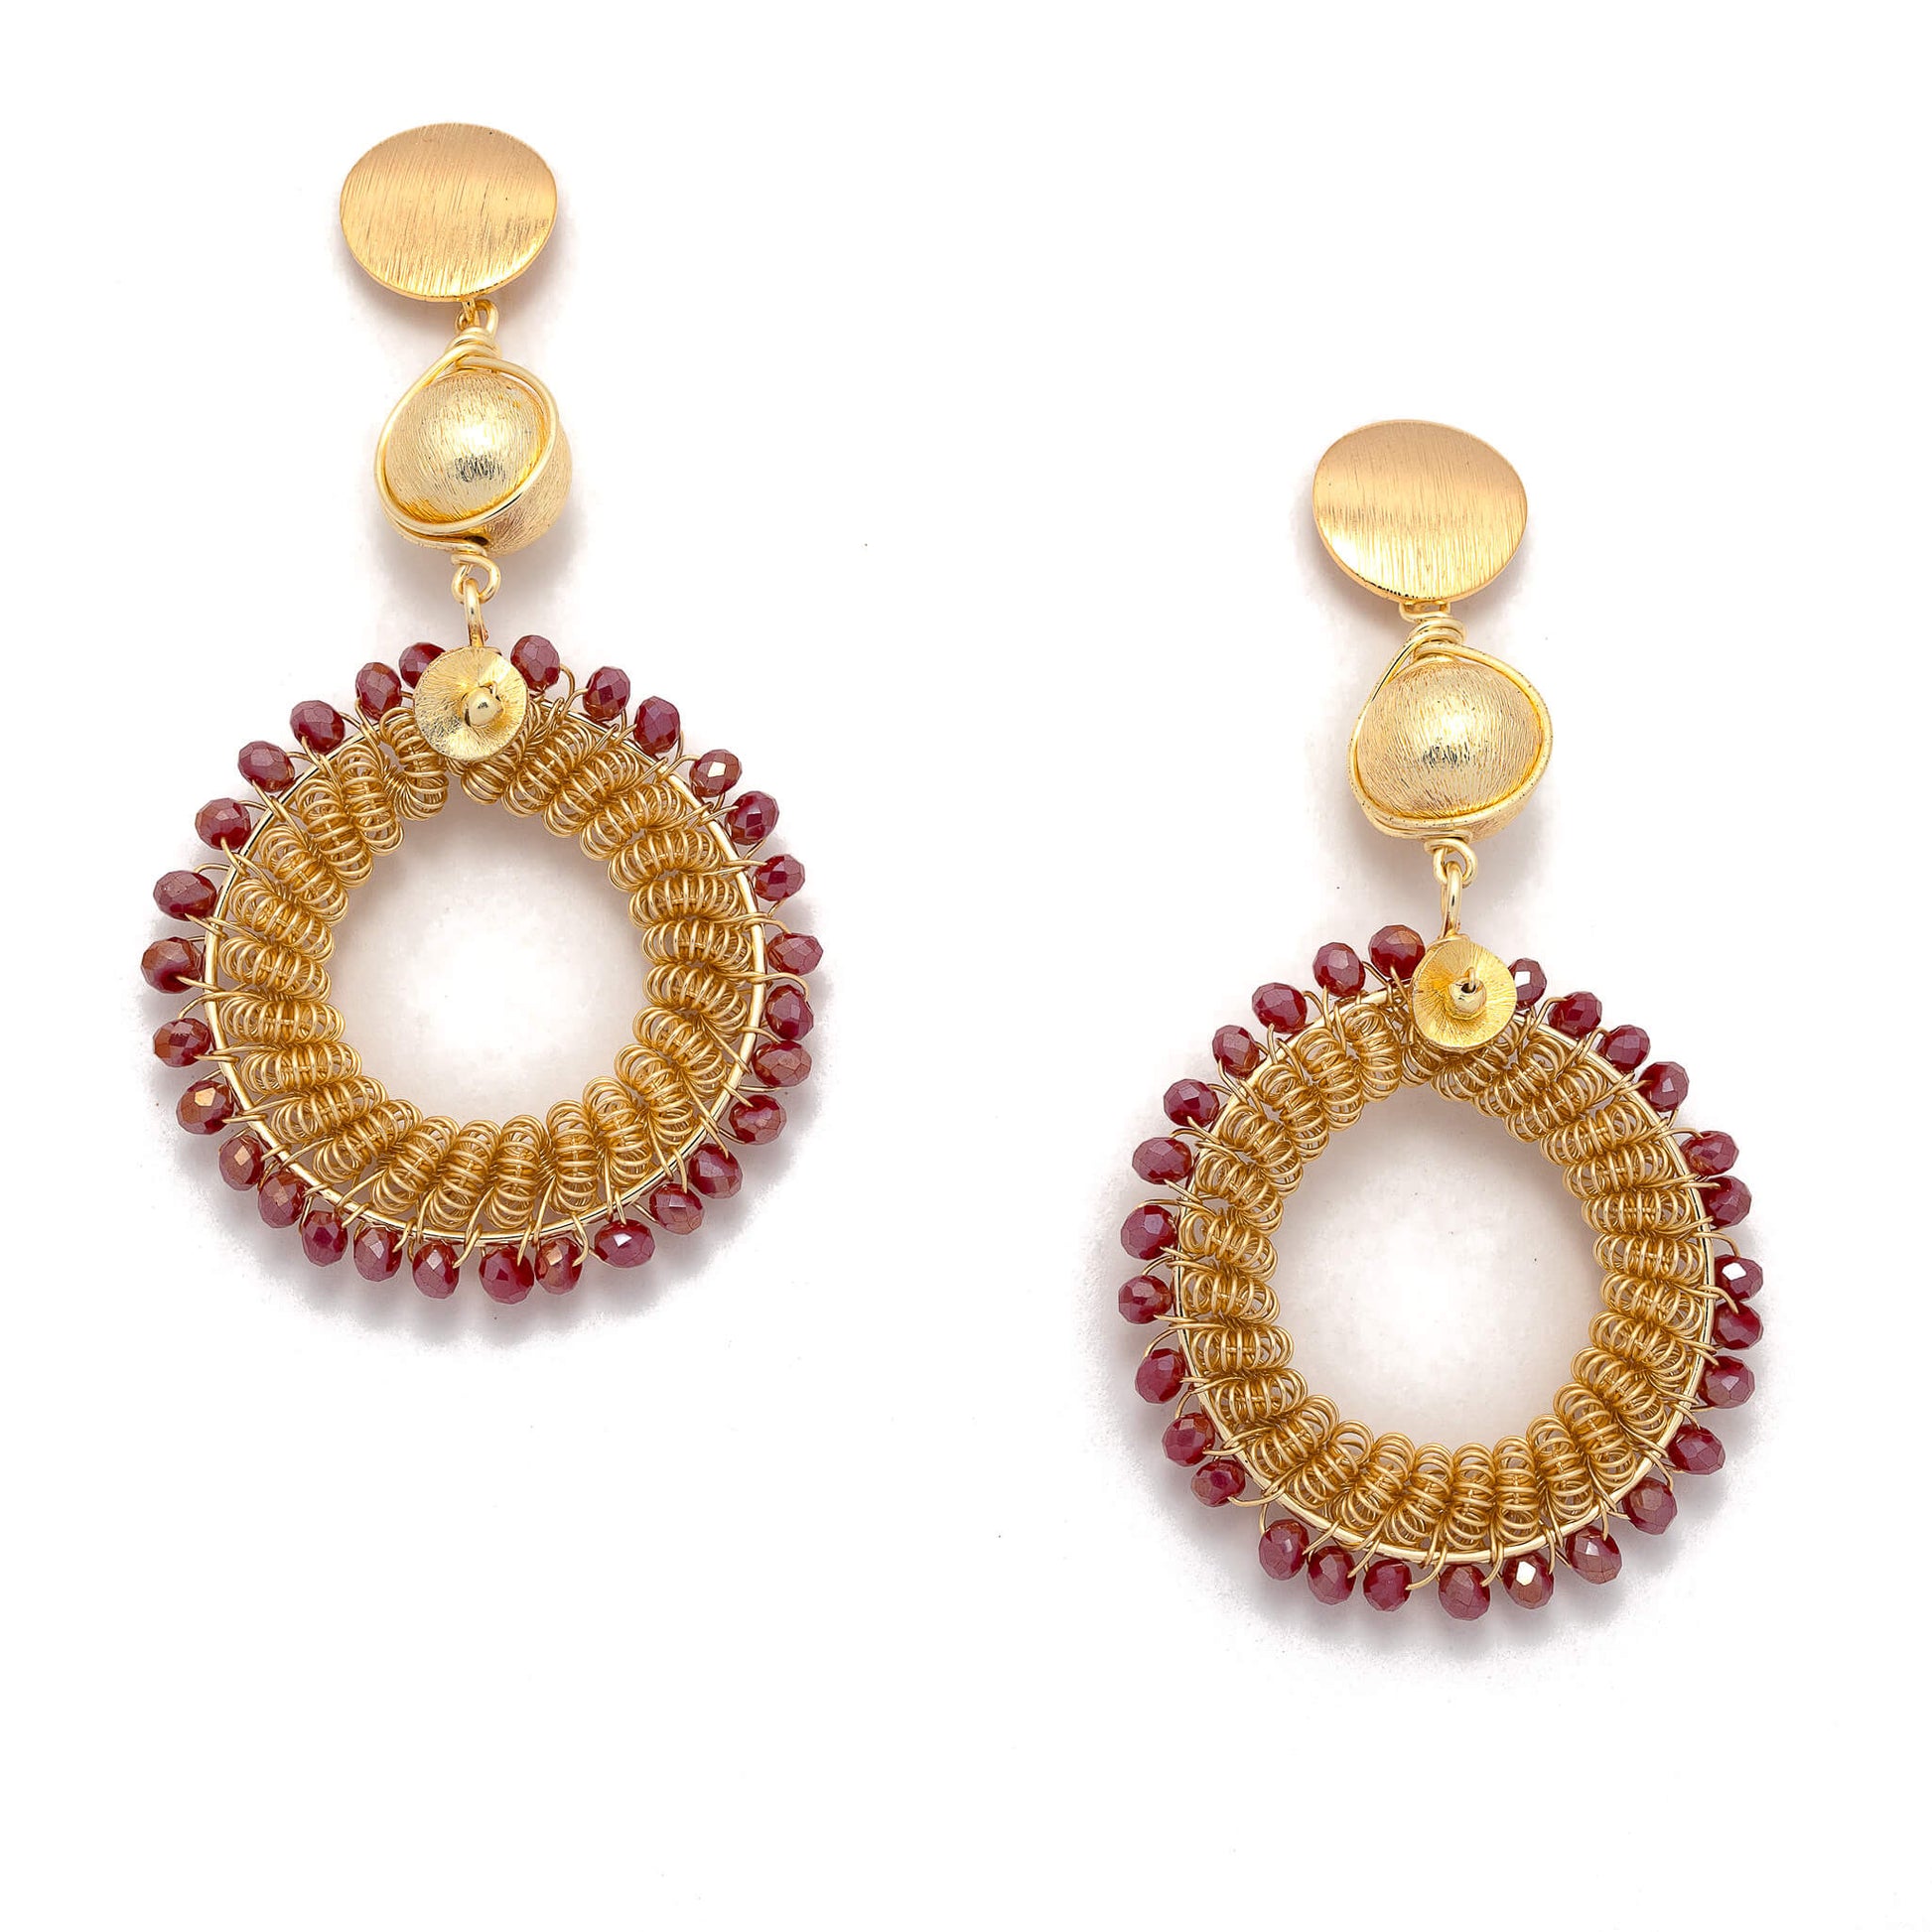 Jalsa Earrings. Gold Color Earrings with Fushia Crystal Seed Beads. Stud Earrings. Metal Frame & Wire Wrapped Earrings